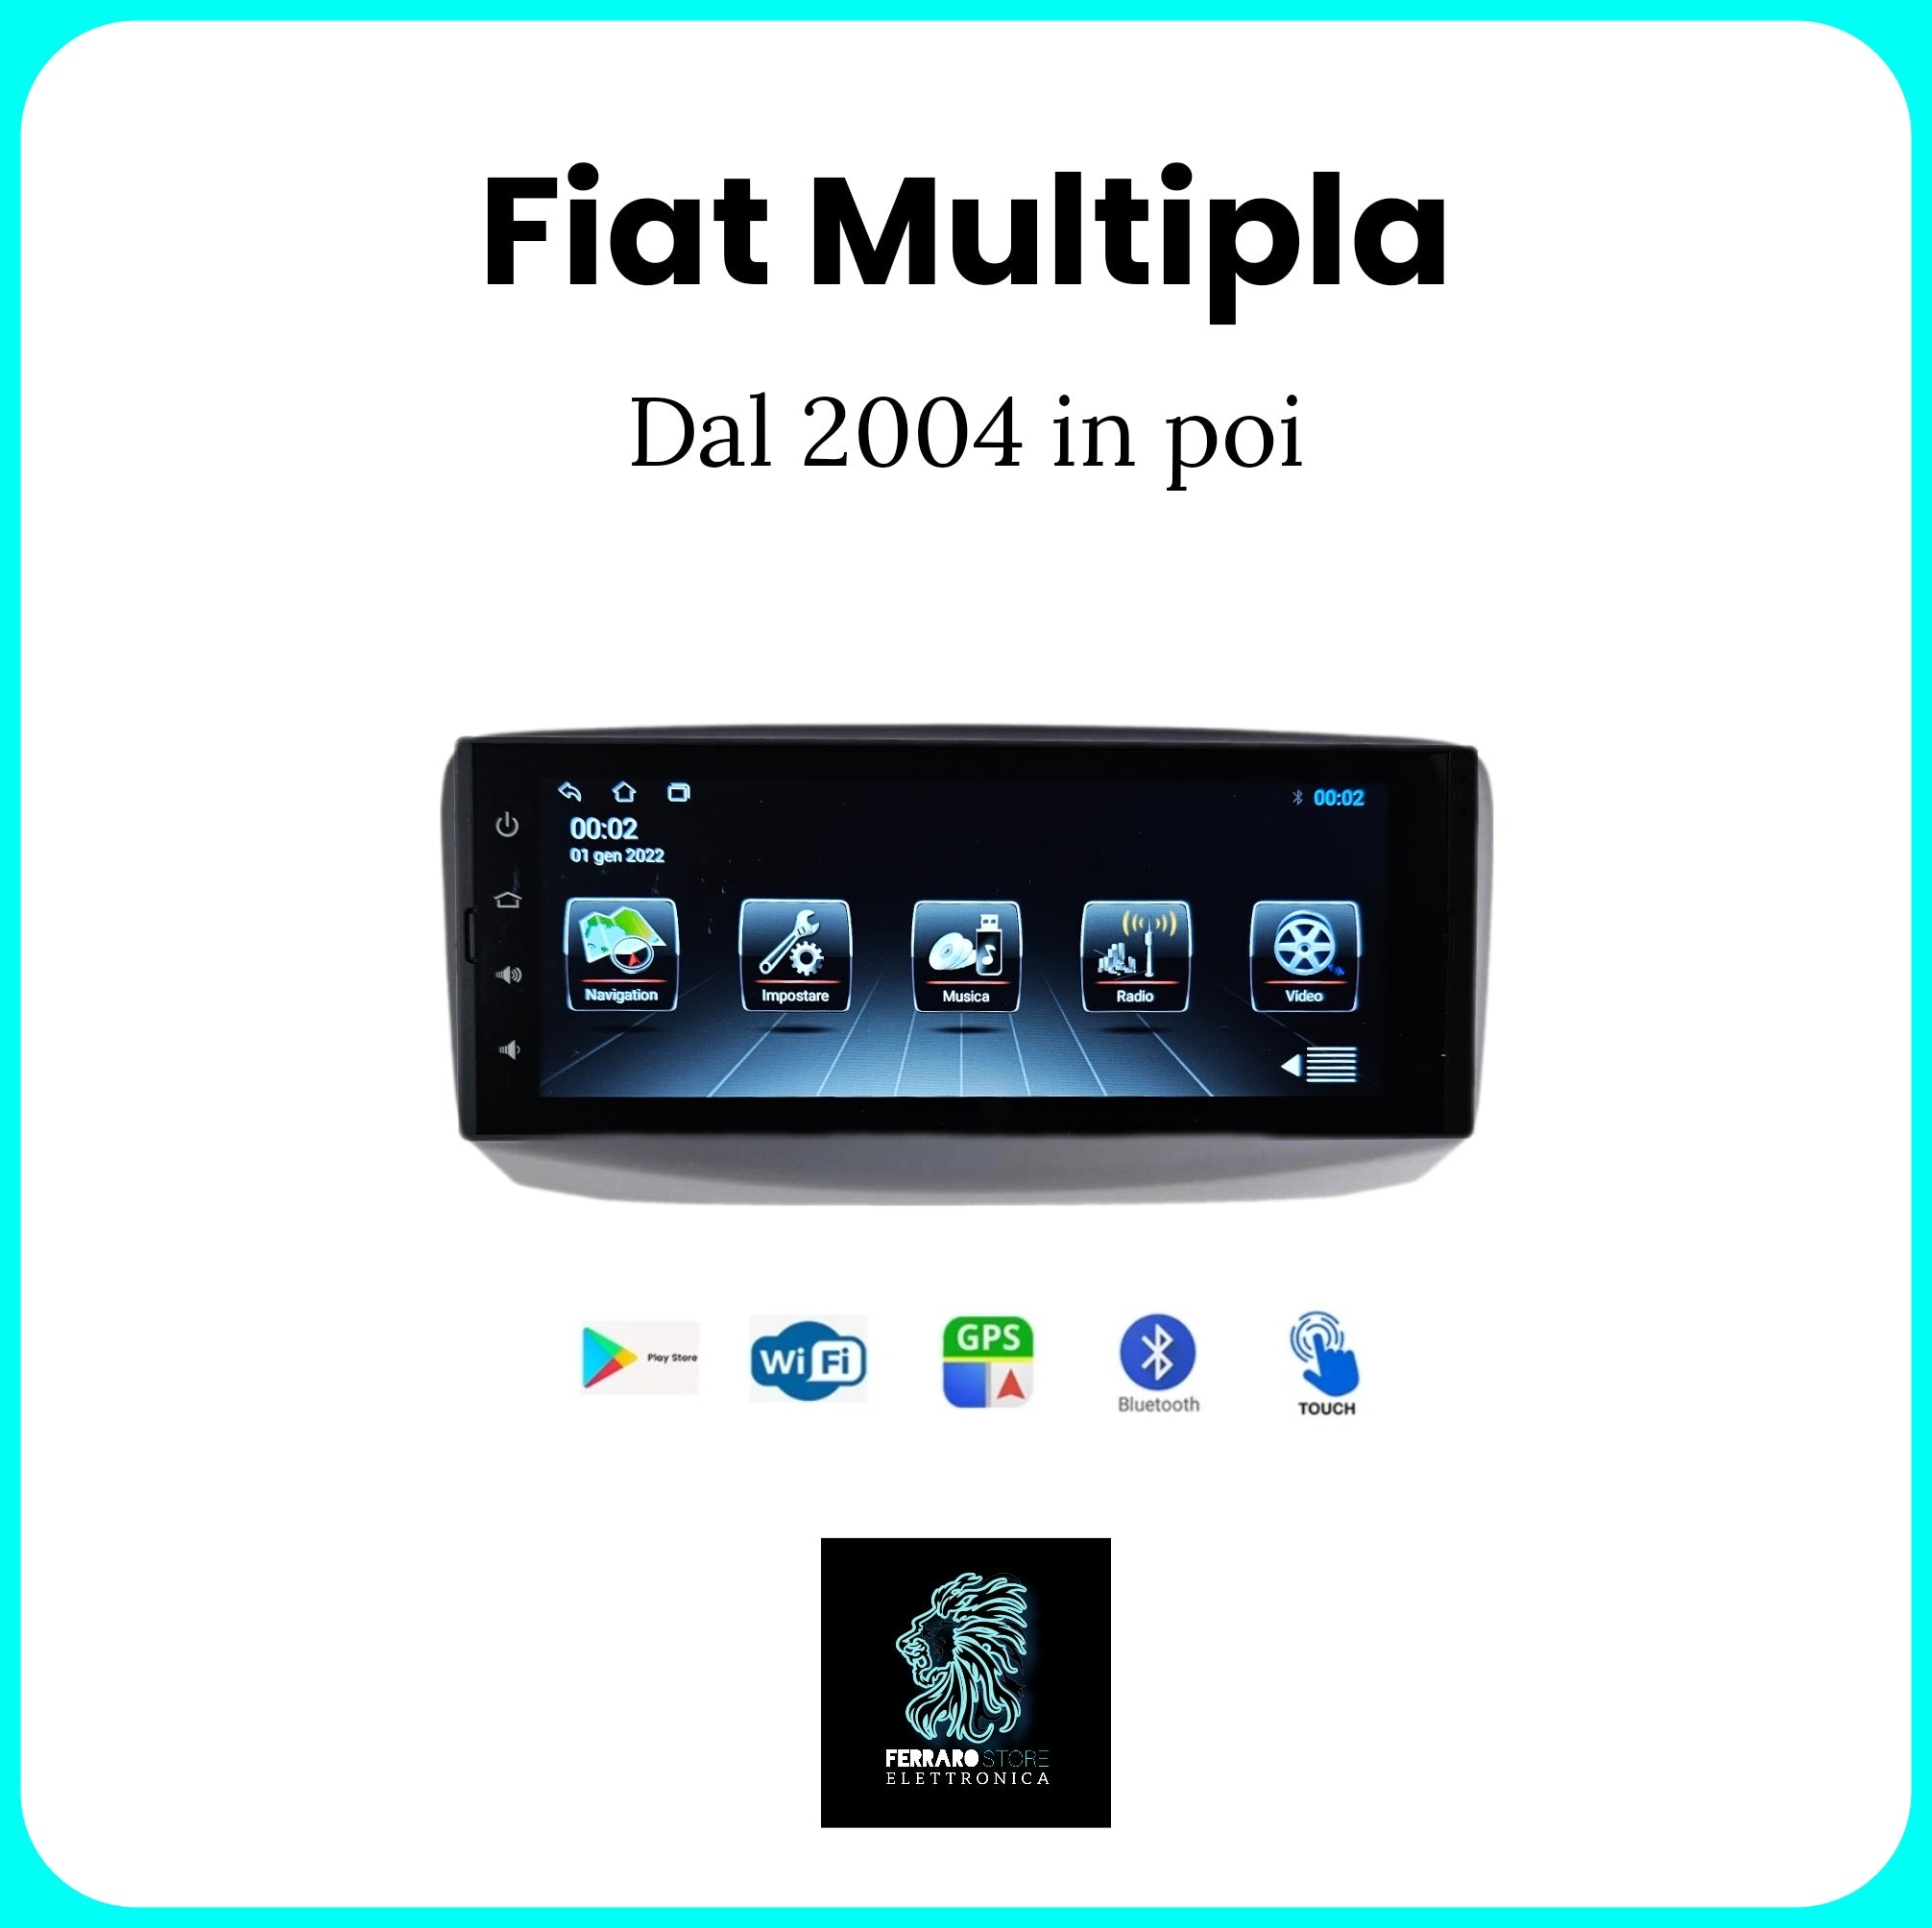 Autoradio per Fiat MULTIPLA - 1Din 6.9"Pollici, Android, GPS, WiFi, Bluetooth, Youtube, Playstore, Radio, Playstore.